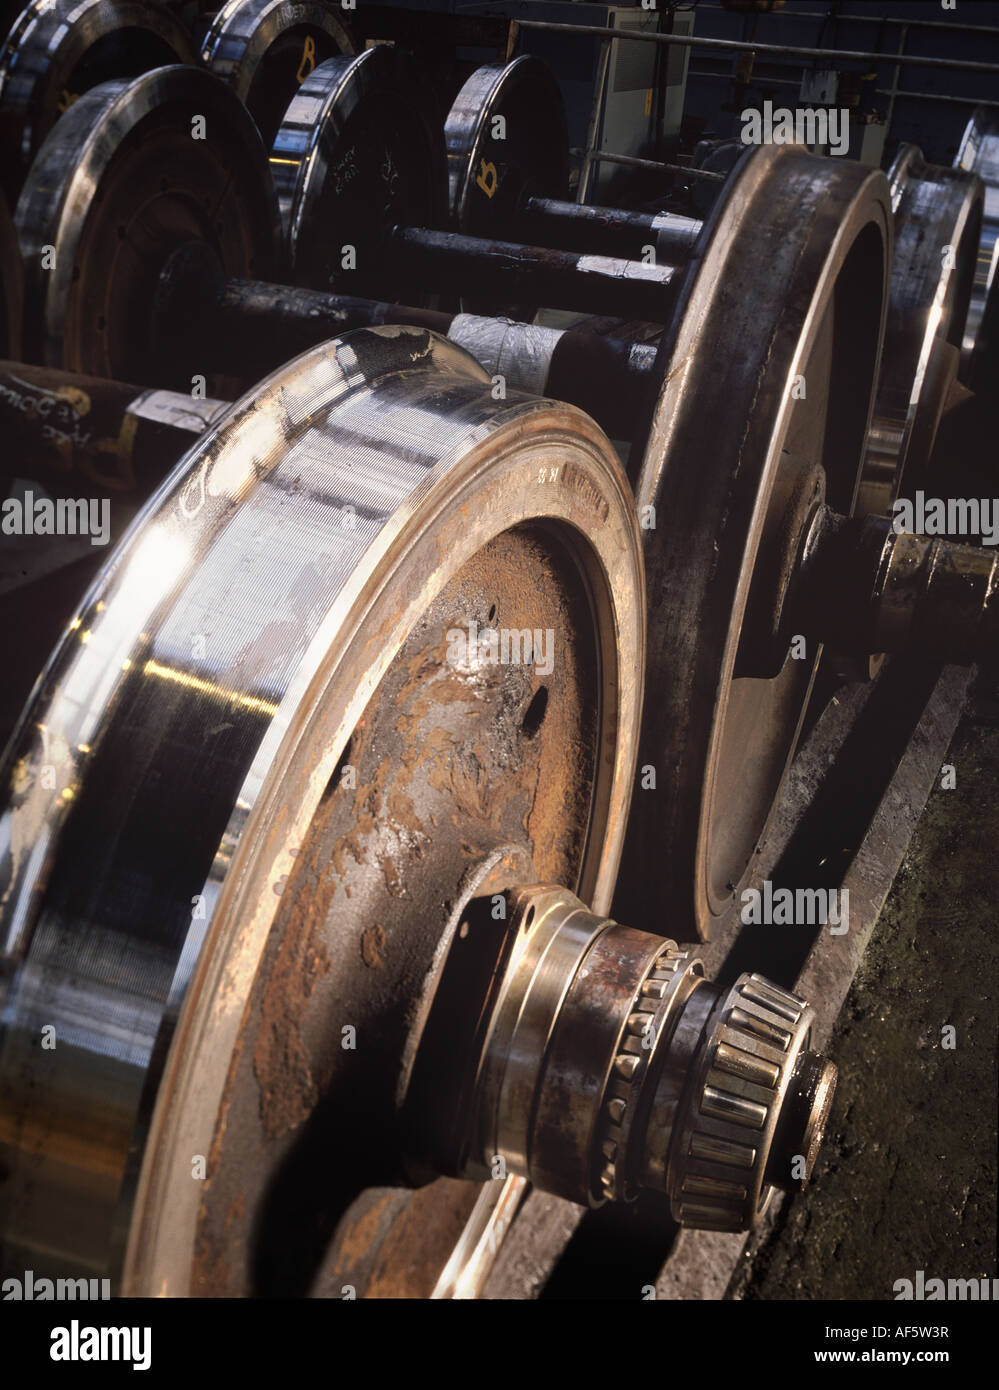 Railway carriage wheels awaiting repair Stock Photo